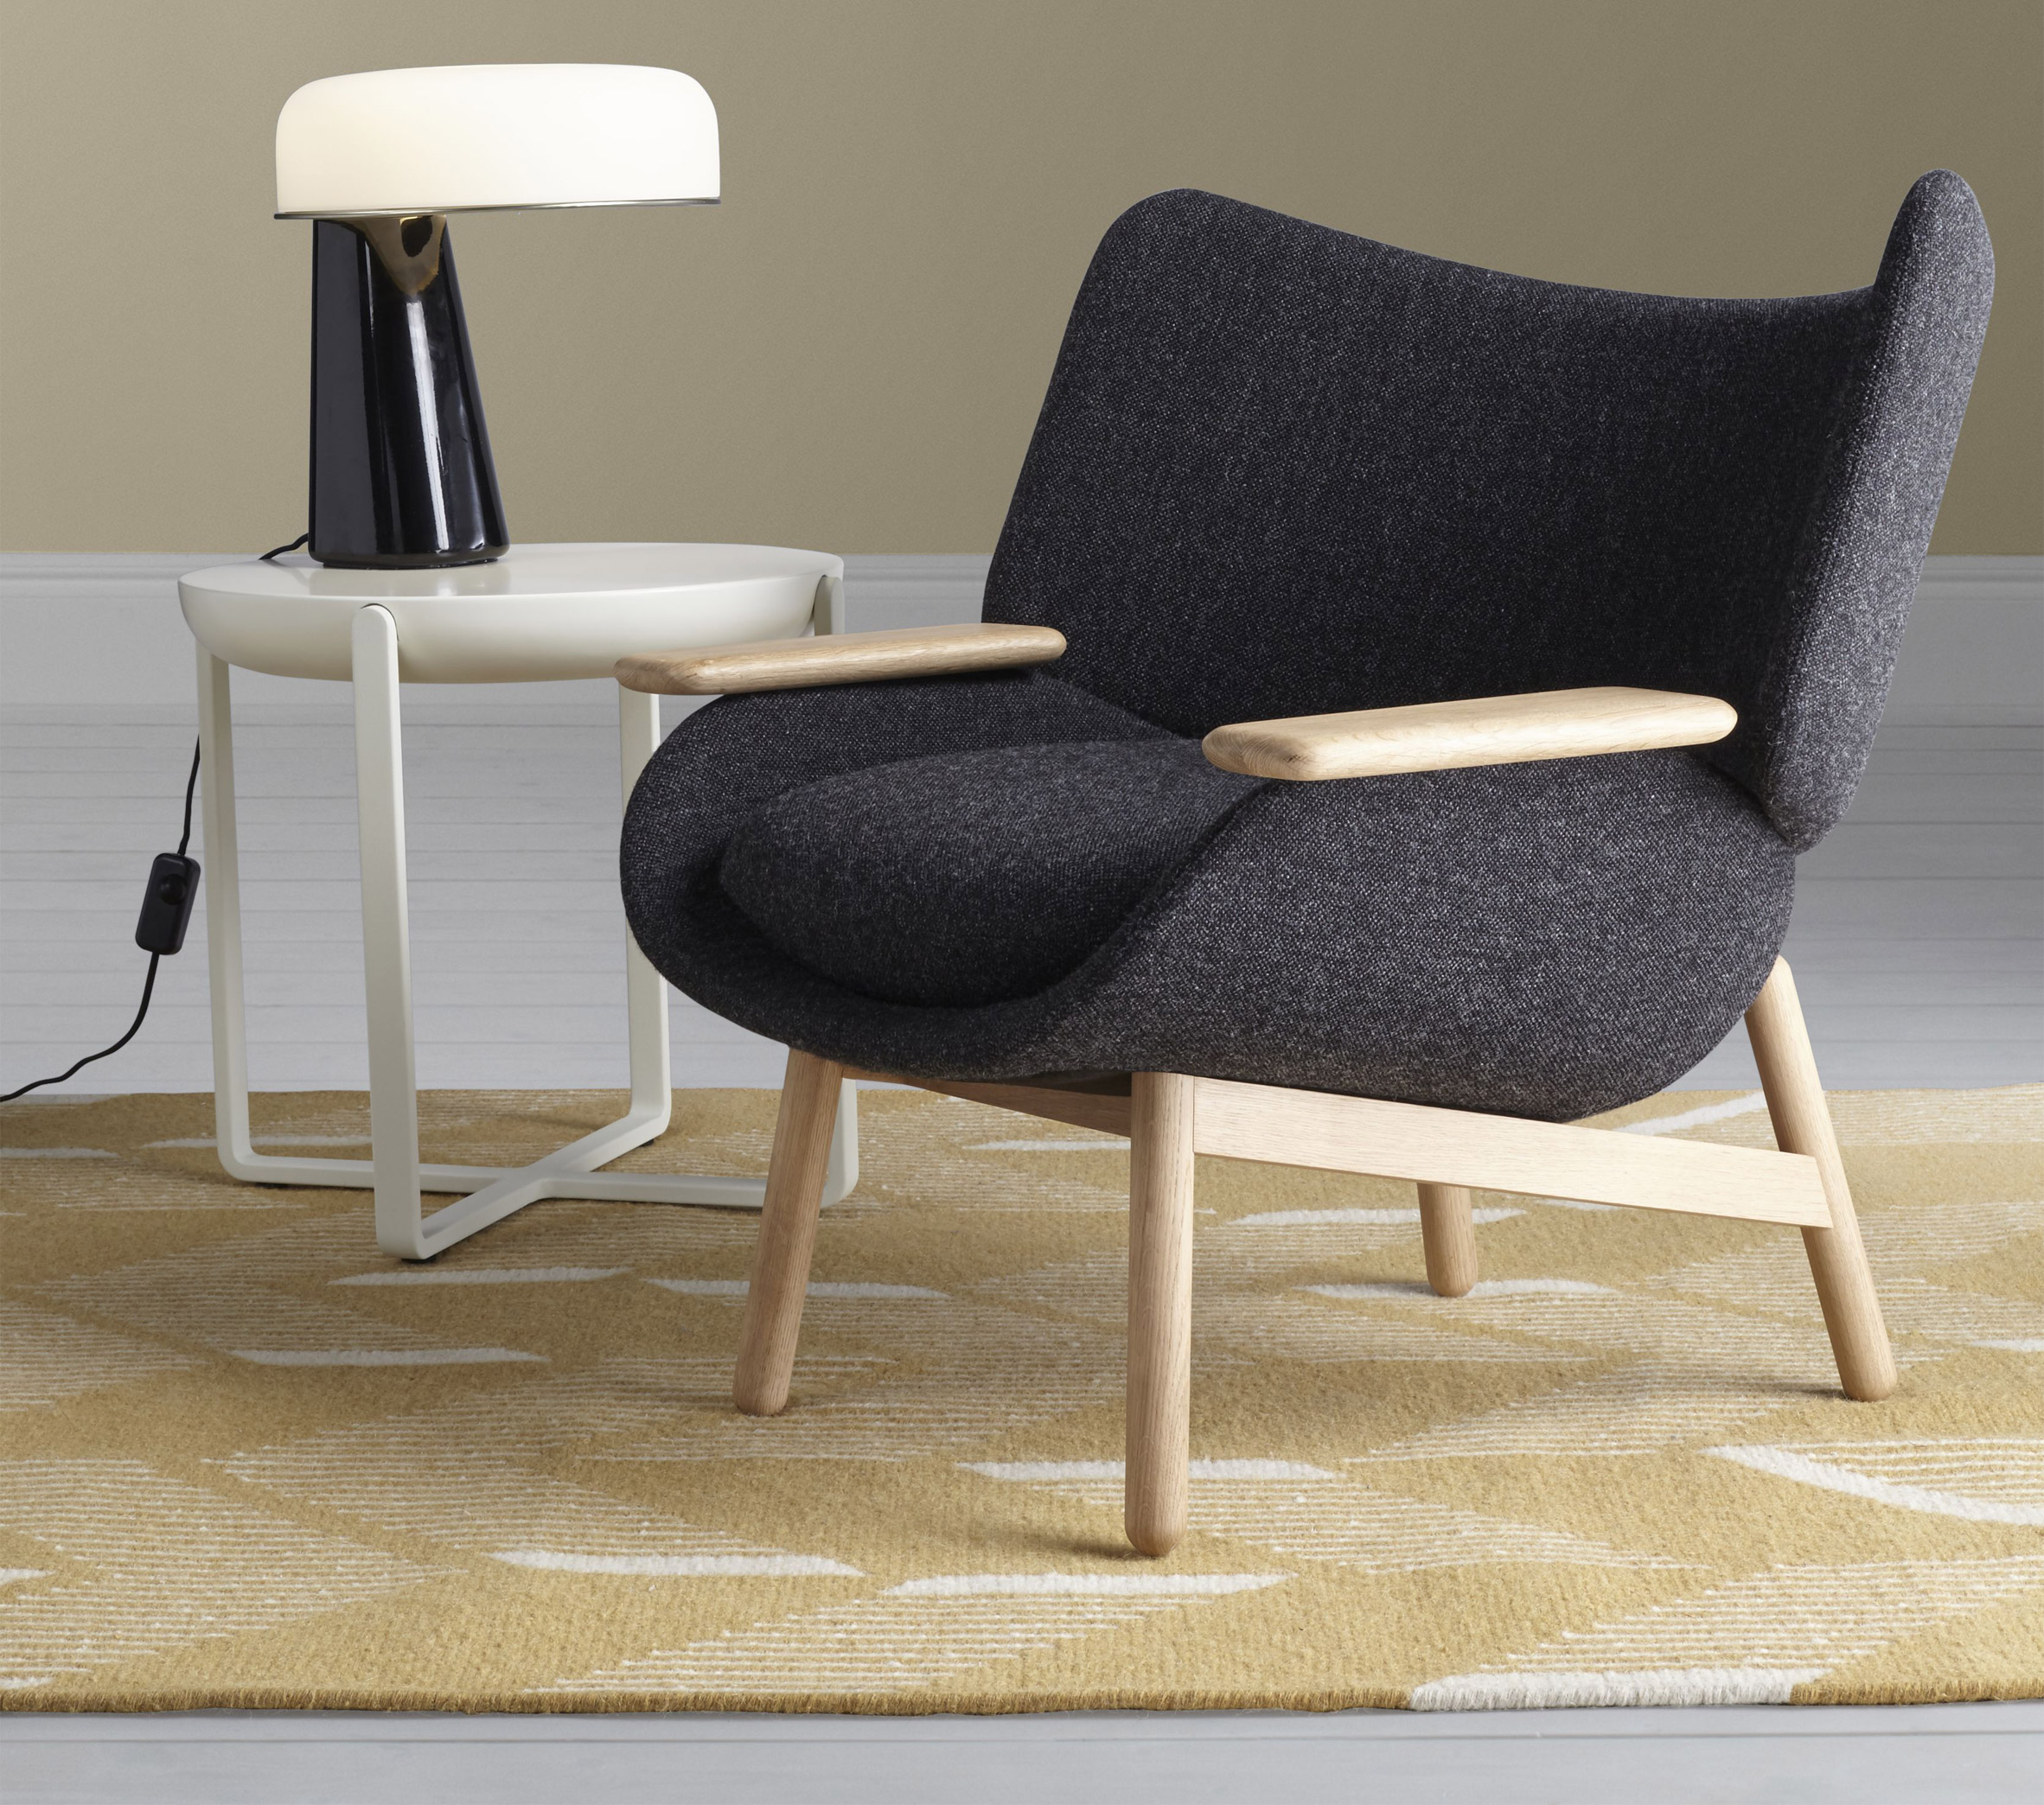 doshi-levien-furniture-collection-john-lewis-design_dezeen_2364_col_7